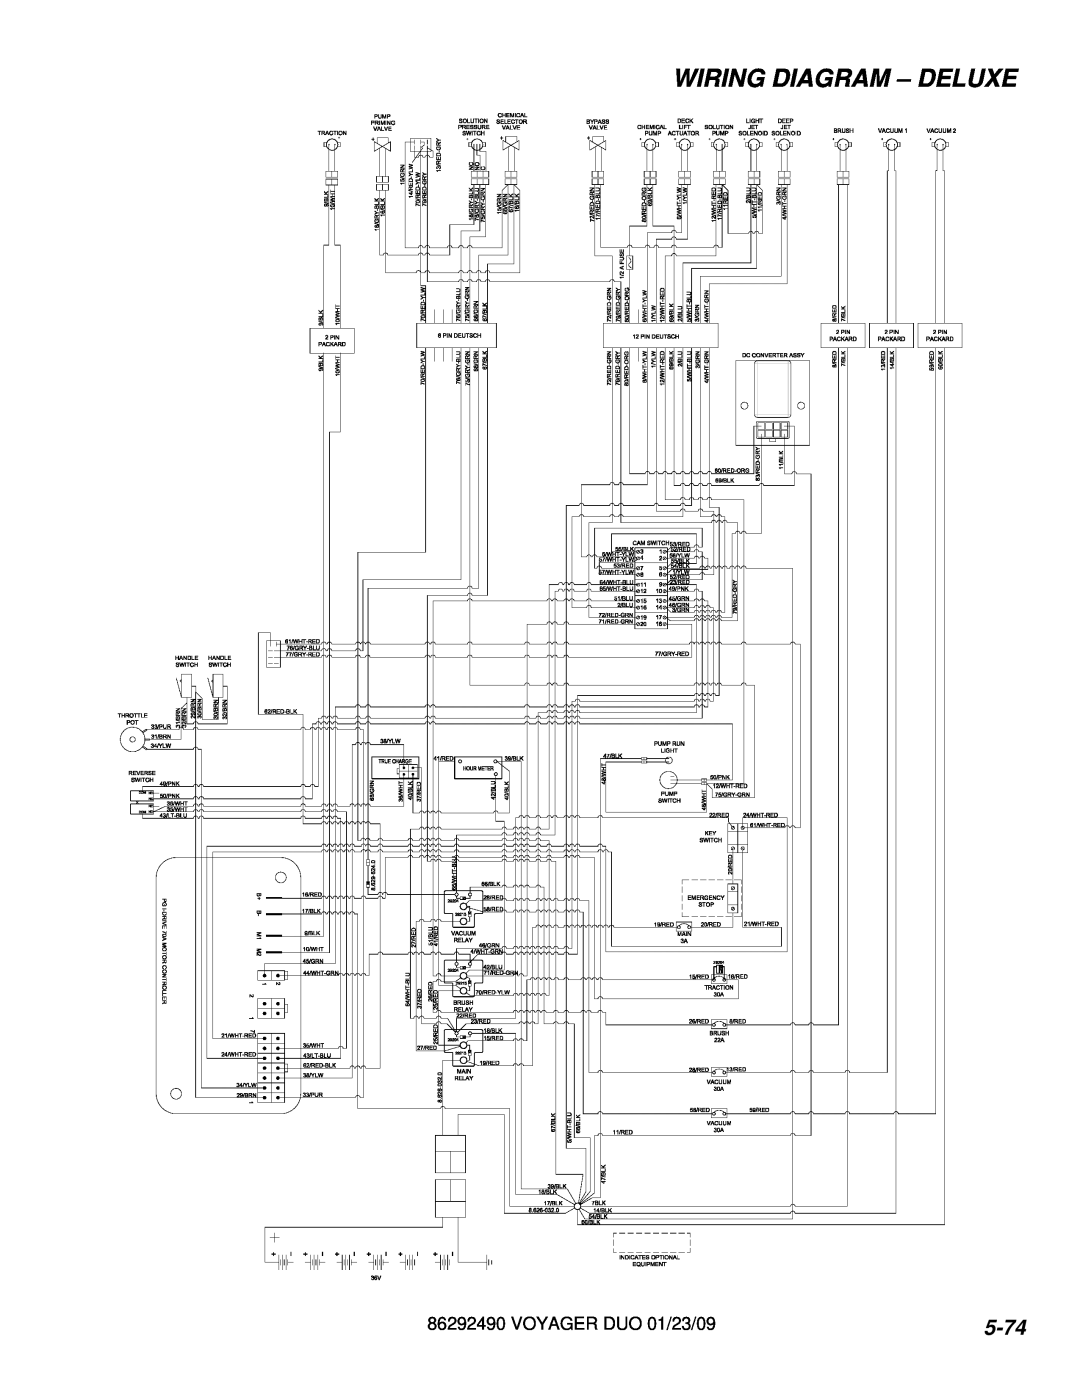 Windsor 10086150, 10086130 manual Wiring Diagram – Deluxe, 5-74, VOYAGER DUO 01/23/09 